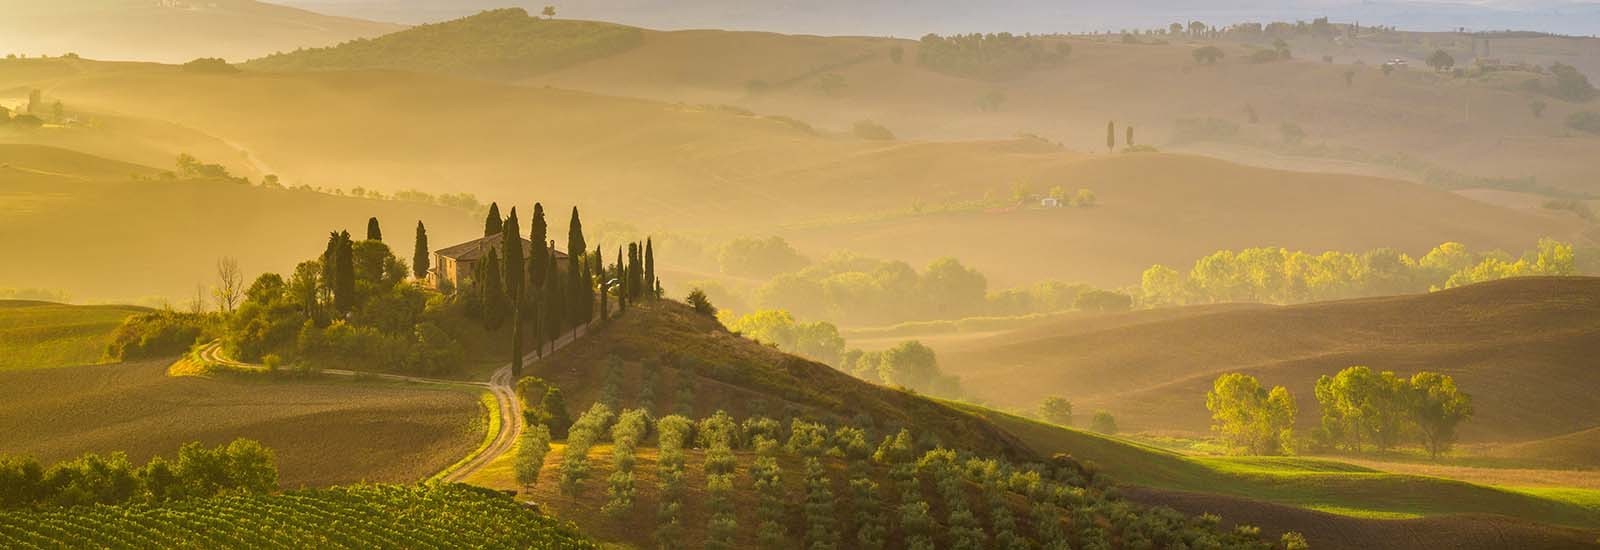 Vini della regione Toscana - enoteca online